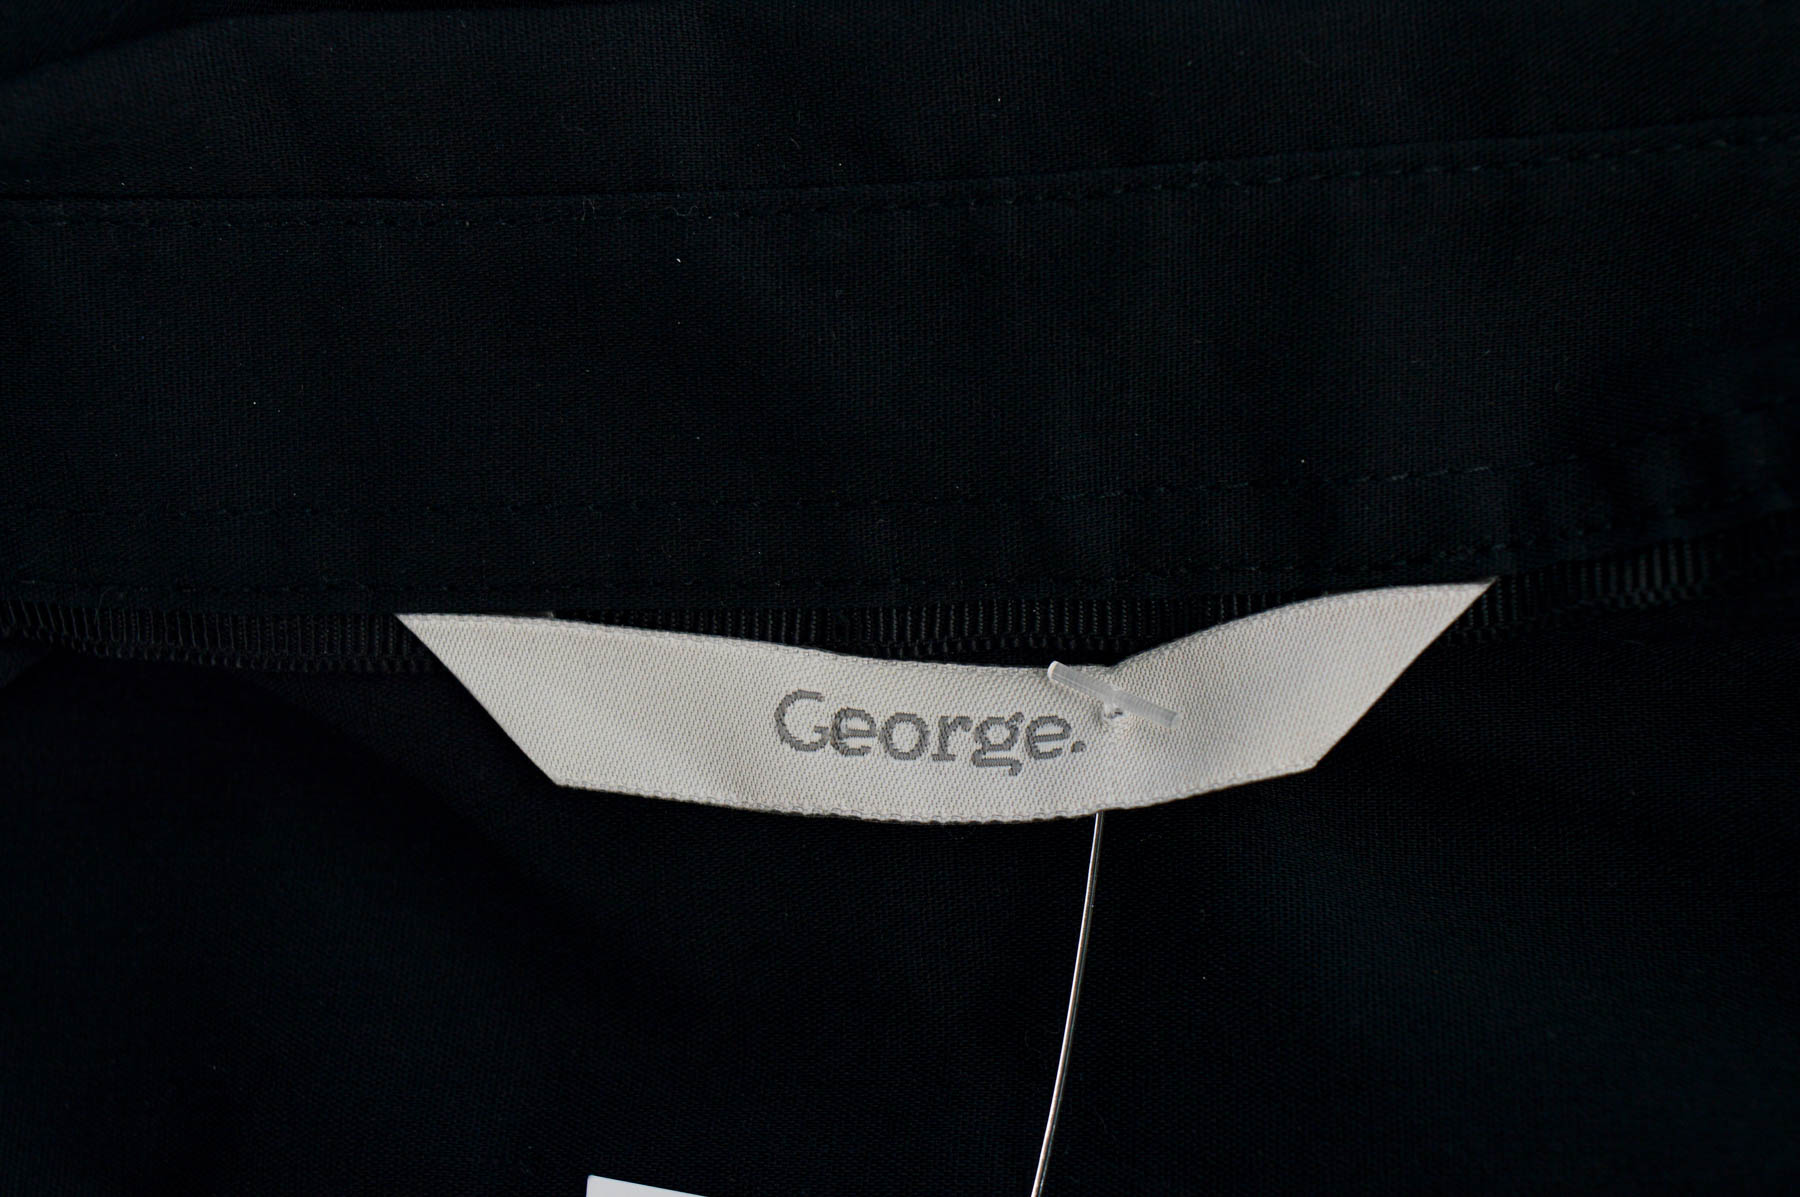 Women's shirt - George. - 2